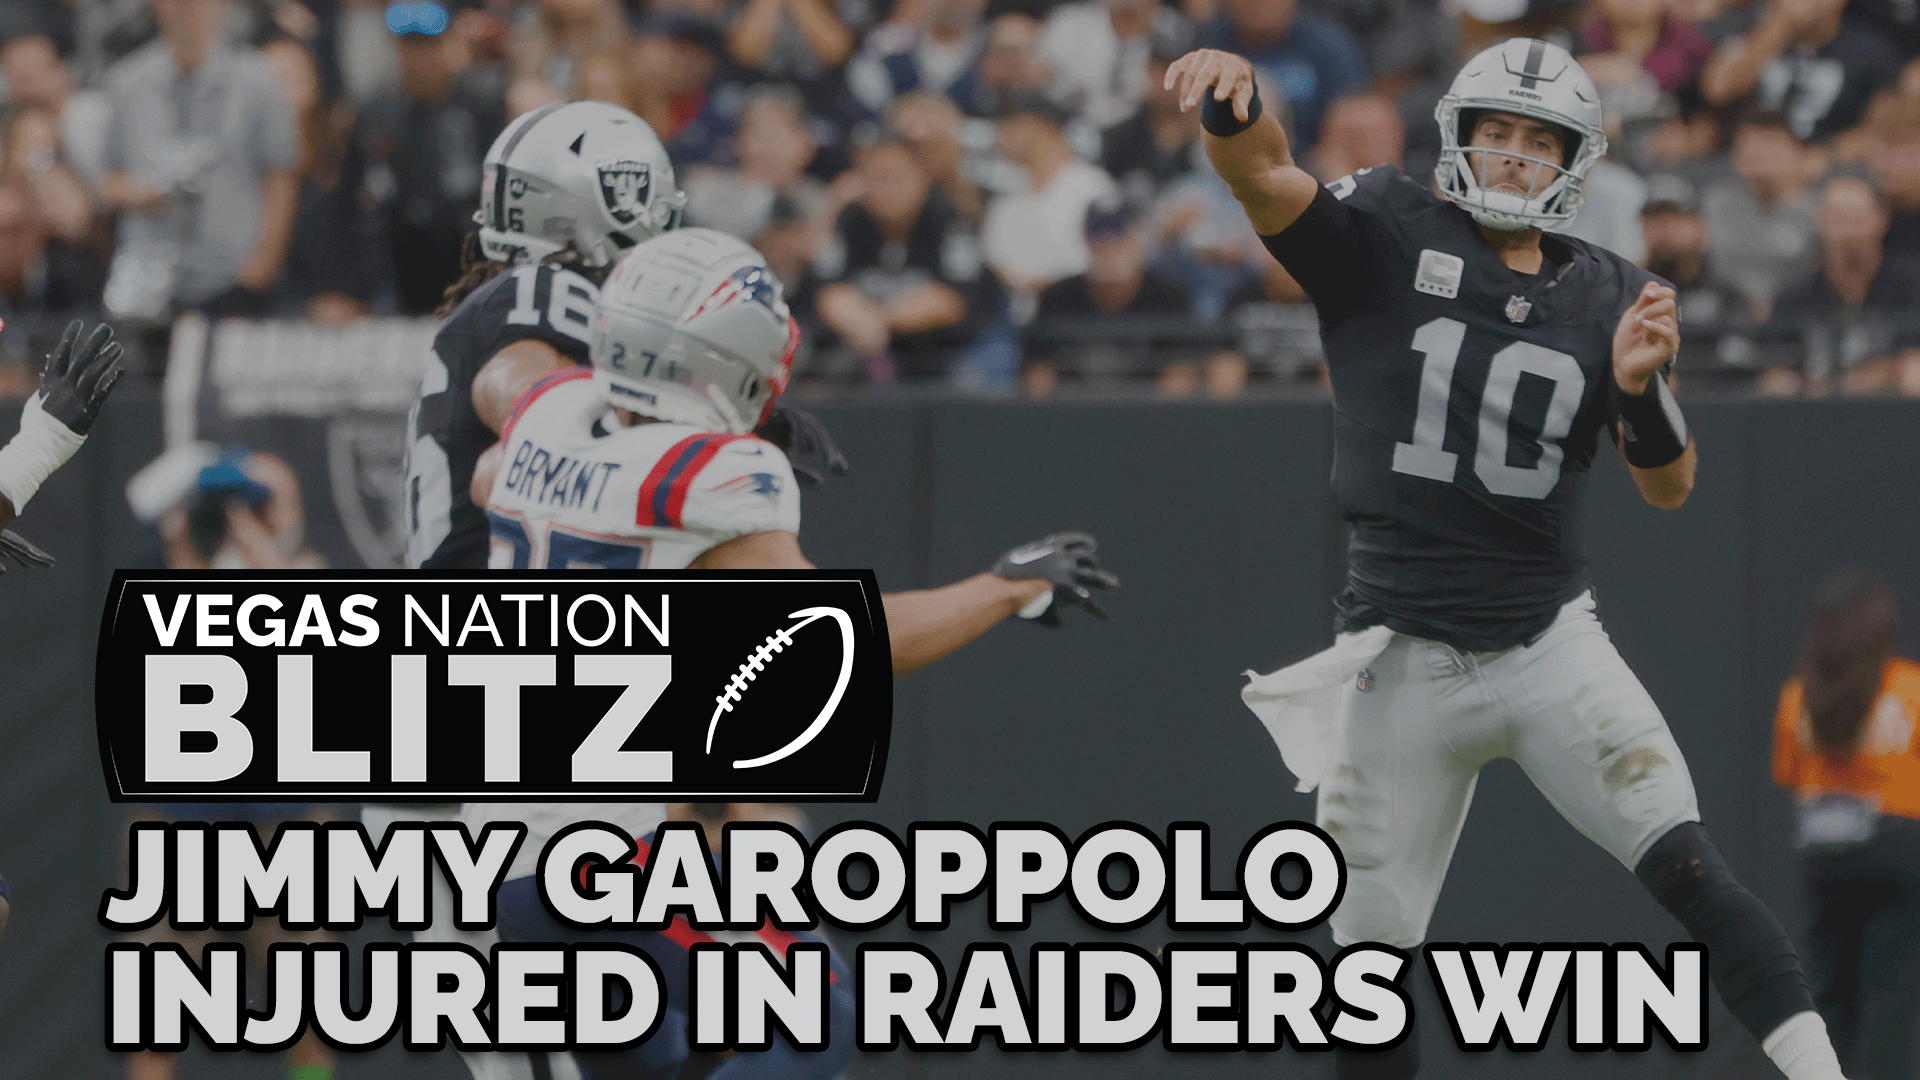 Jimmy Garoppolo injured as Raiders beat Patriots